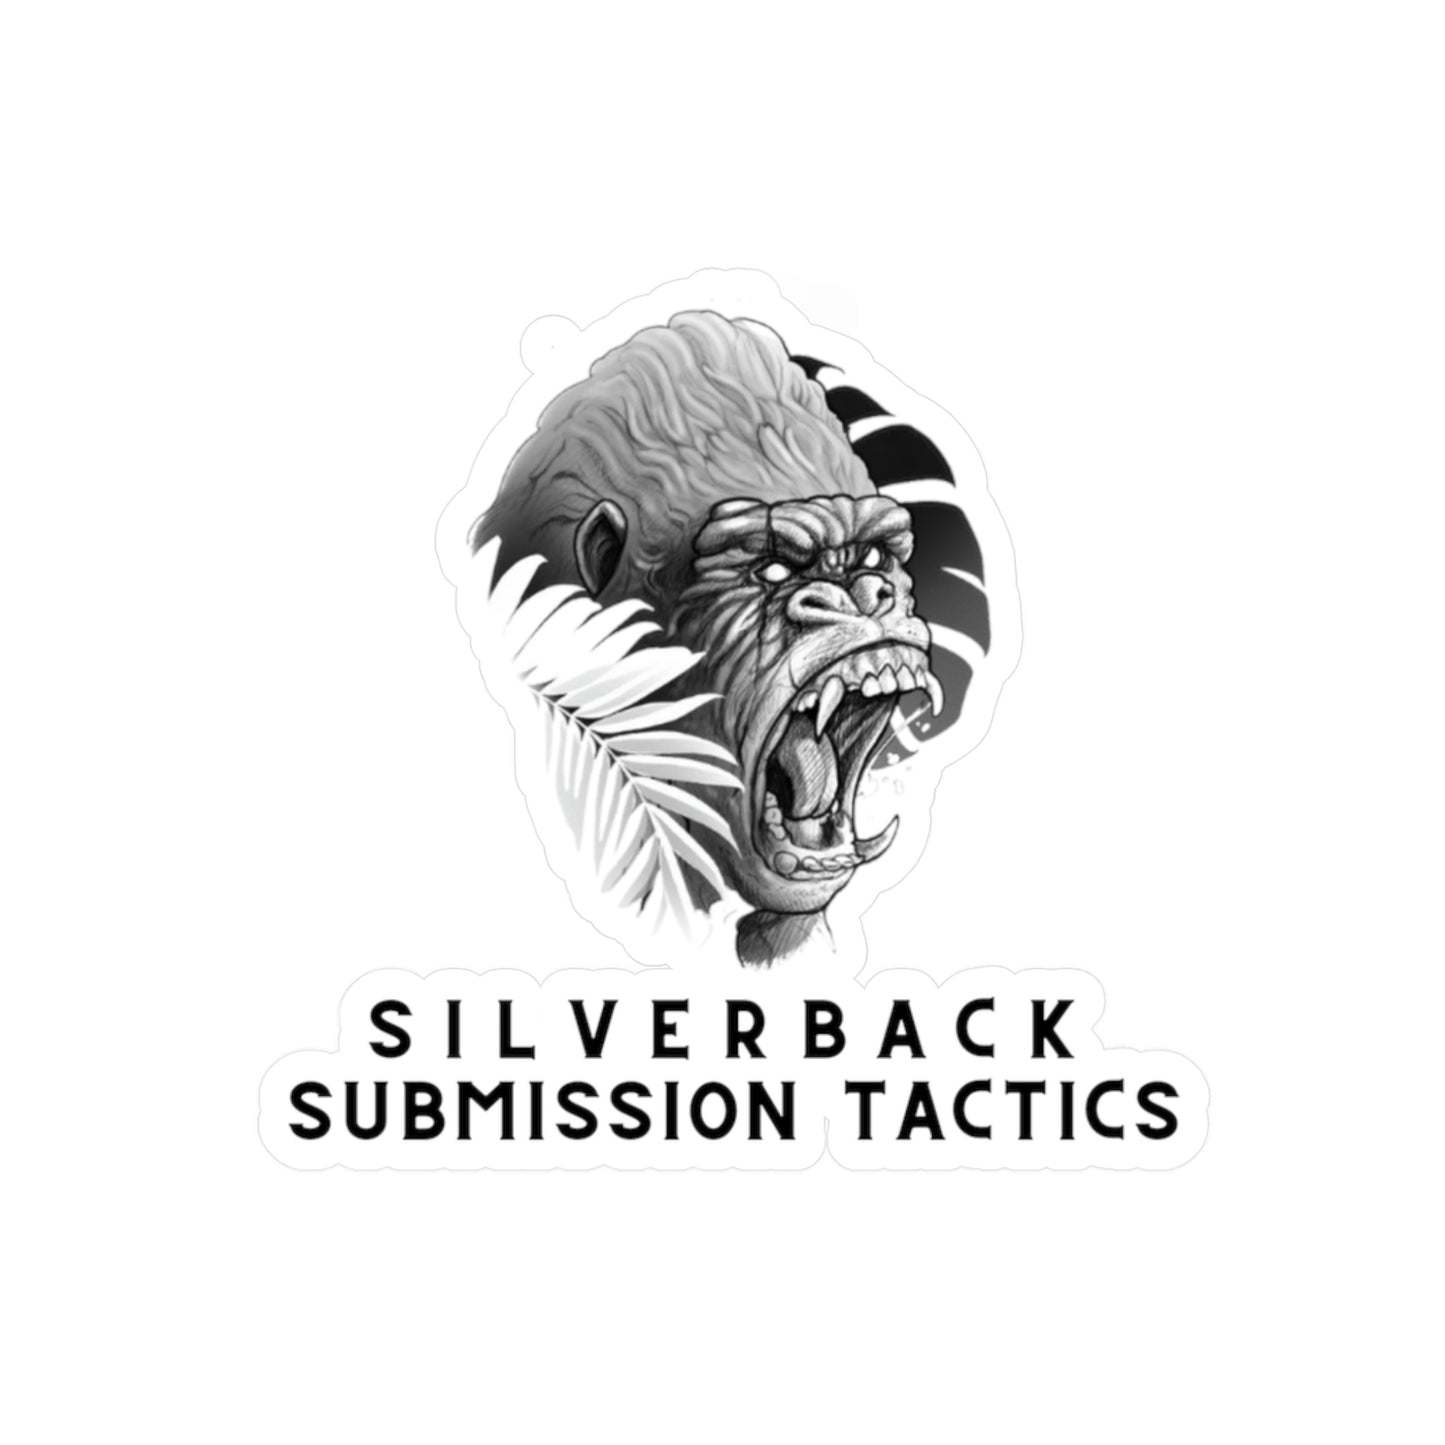 Vinyl Die-Cut Silverback Submission Tactics Sticker